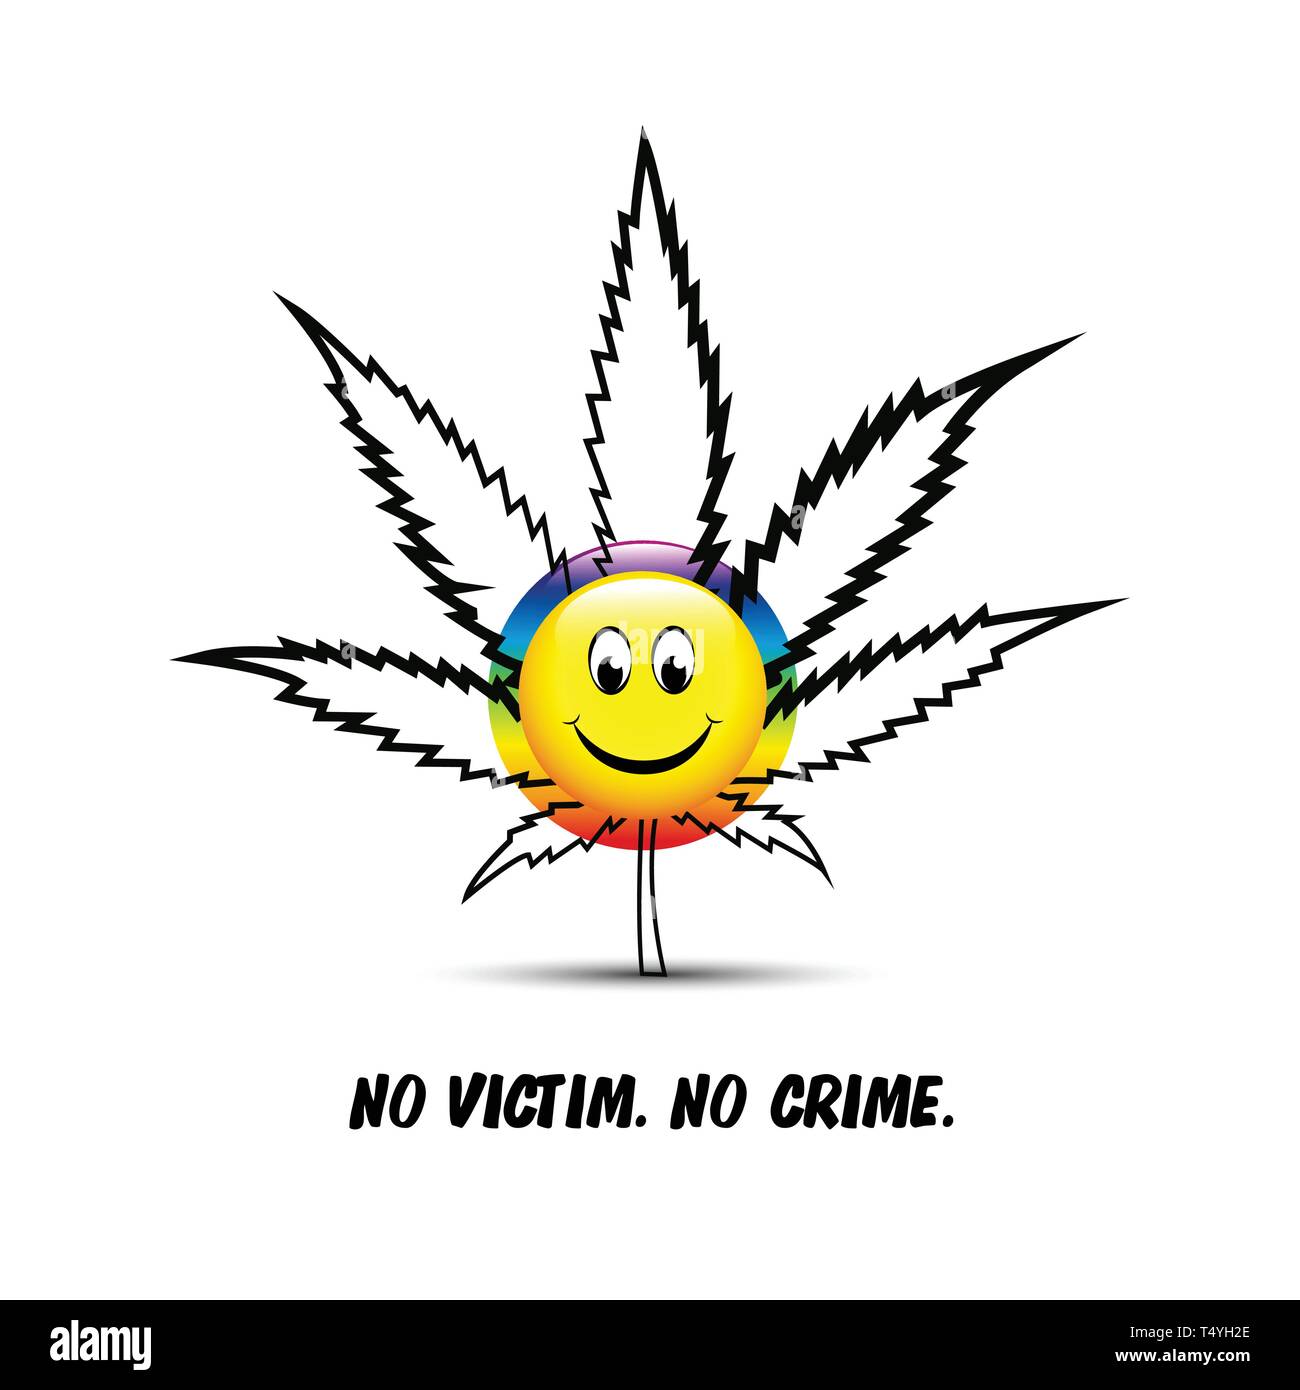 Cute funny lächelt glücklich mit Marihuana weed Blatt kein Opfer kein Verbrechen Typografie Vektor-illustration EPS 10. Stock Vektor